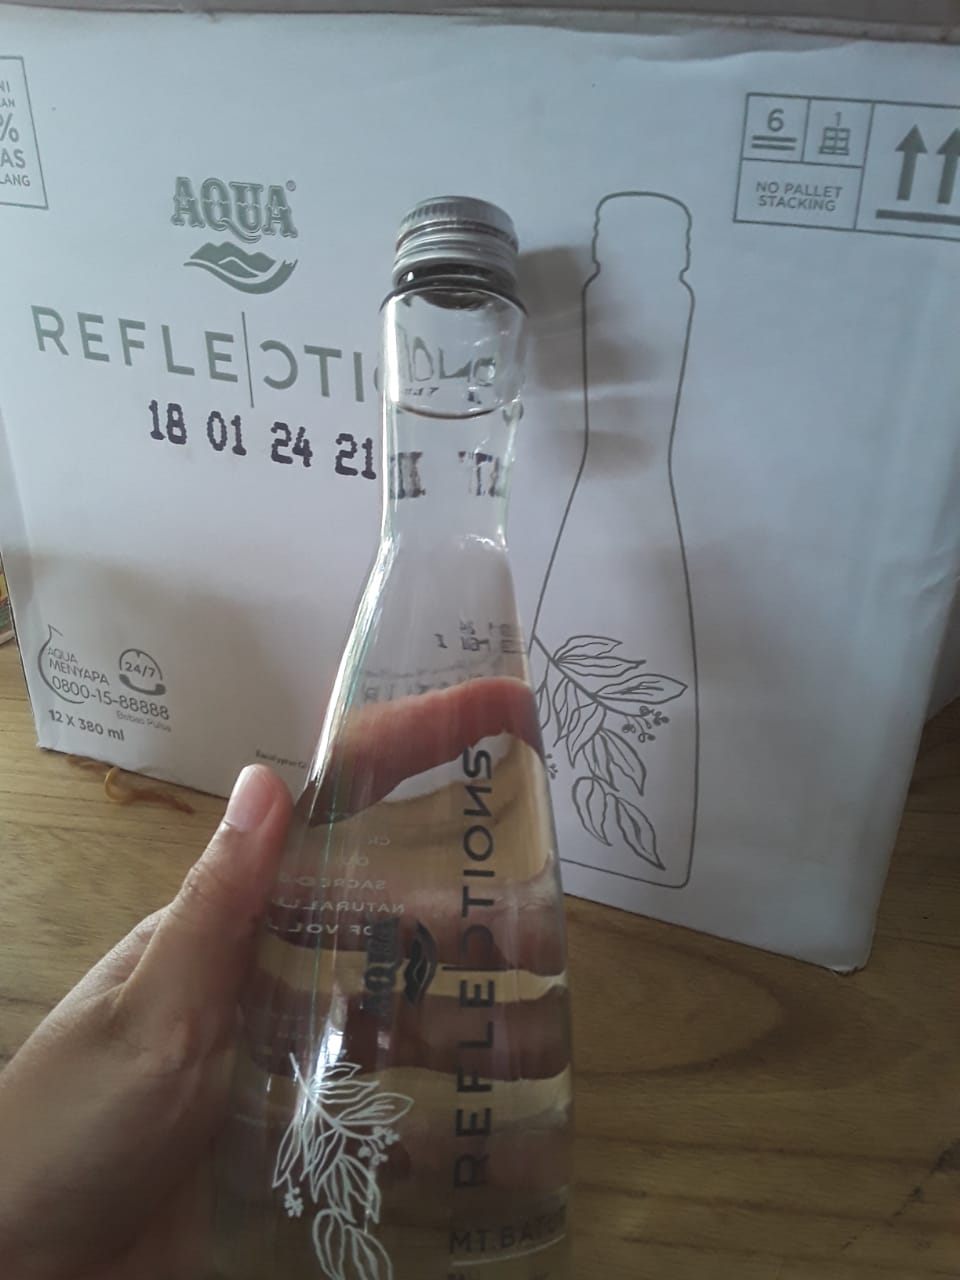 Aqua Reflection botol kaca 380 ml